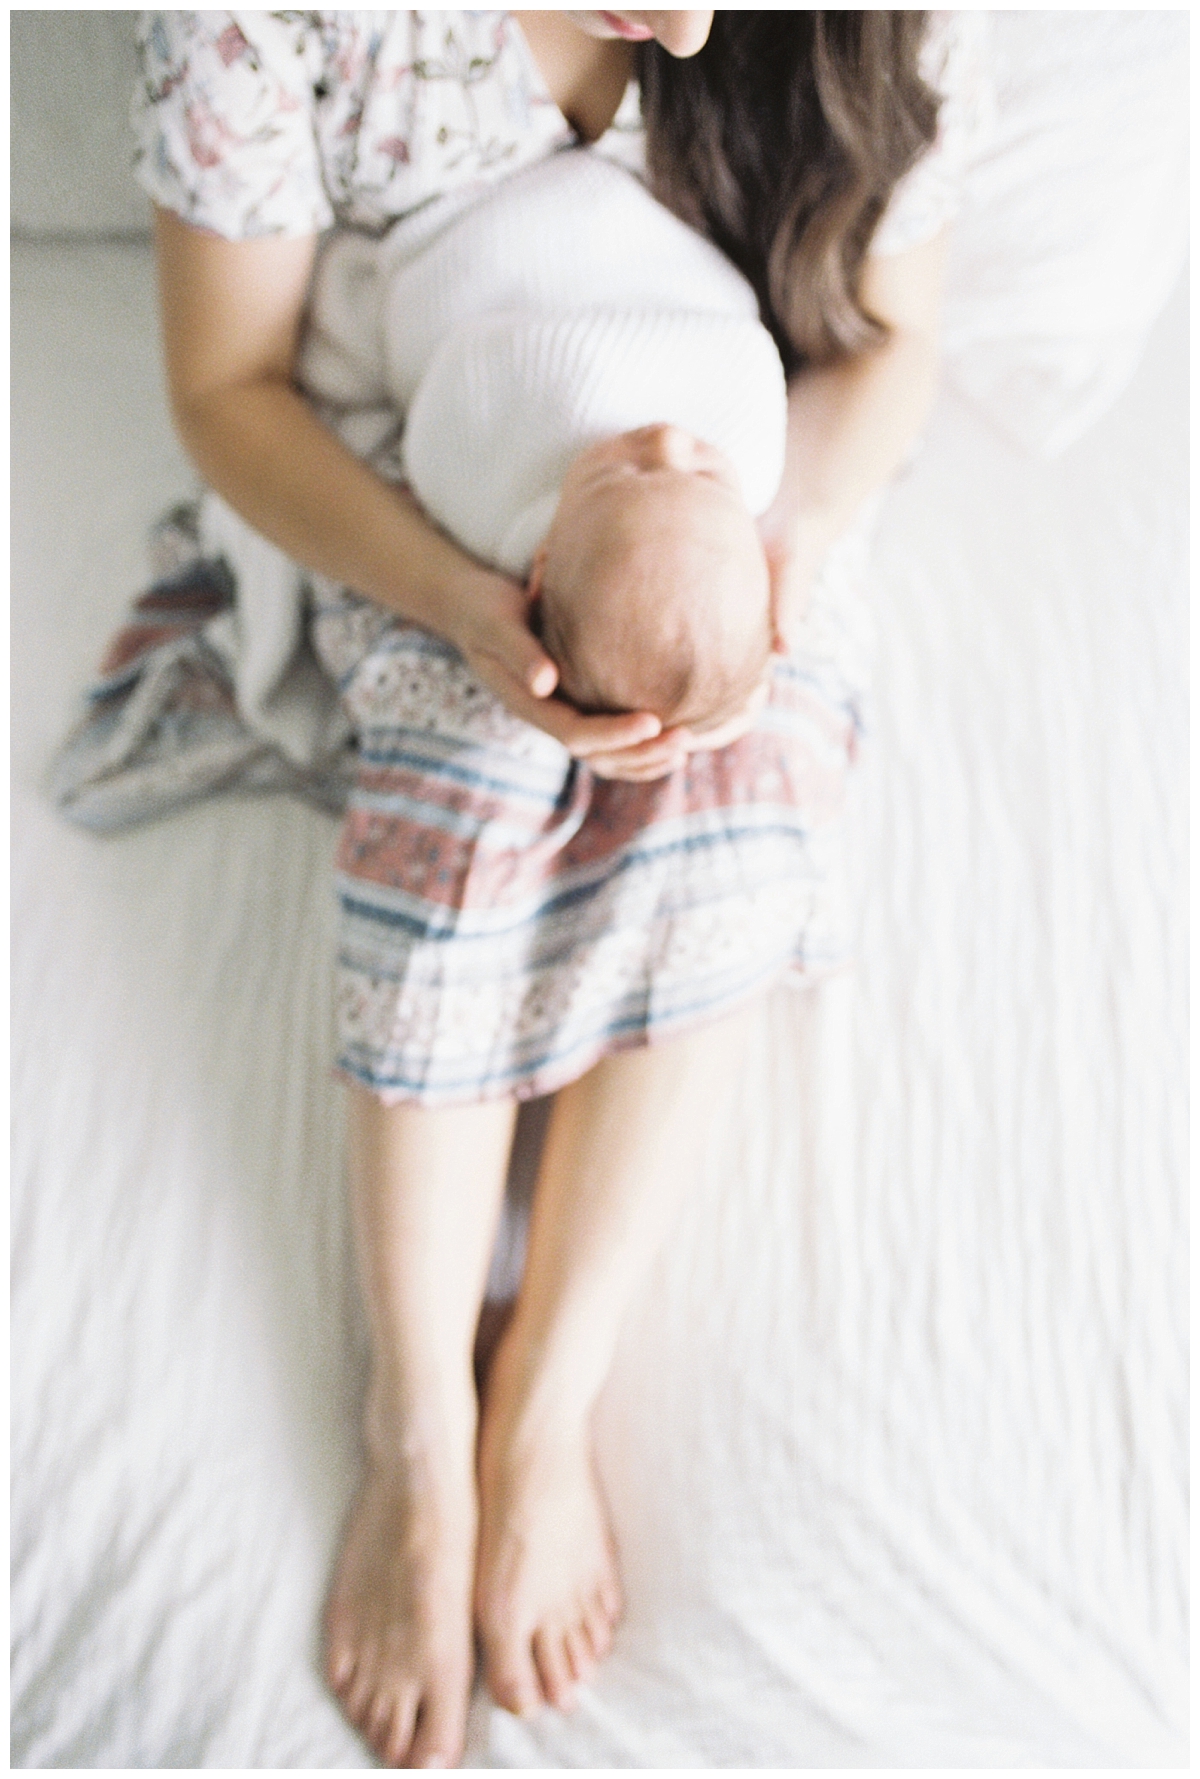 Nashville newborn photo session by Grace Paul Photography